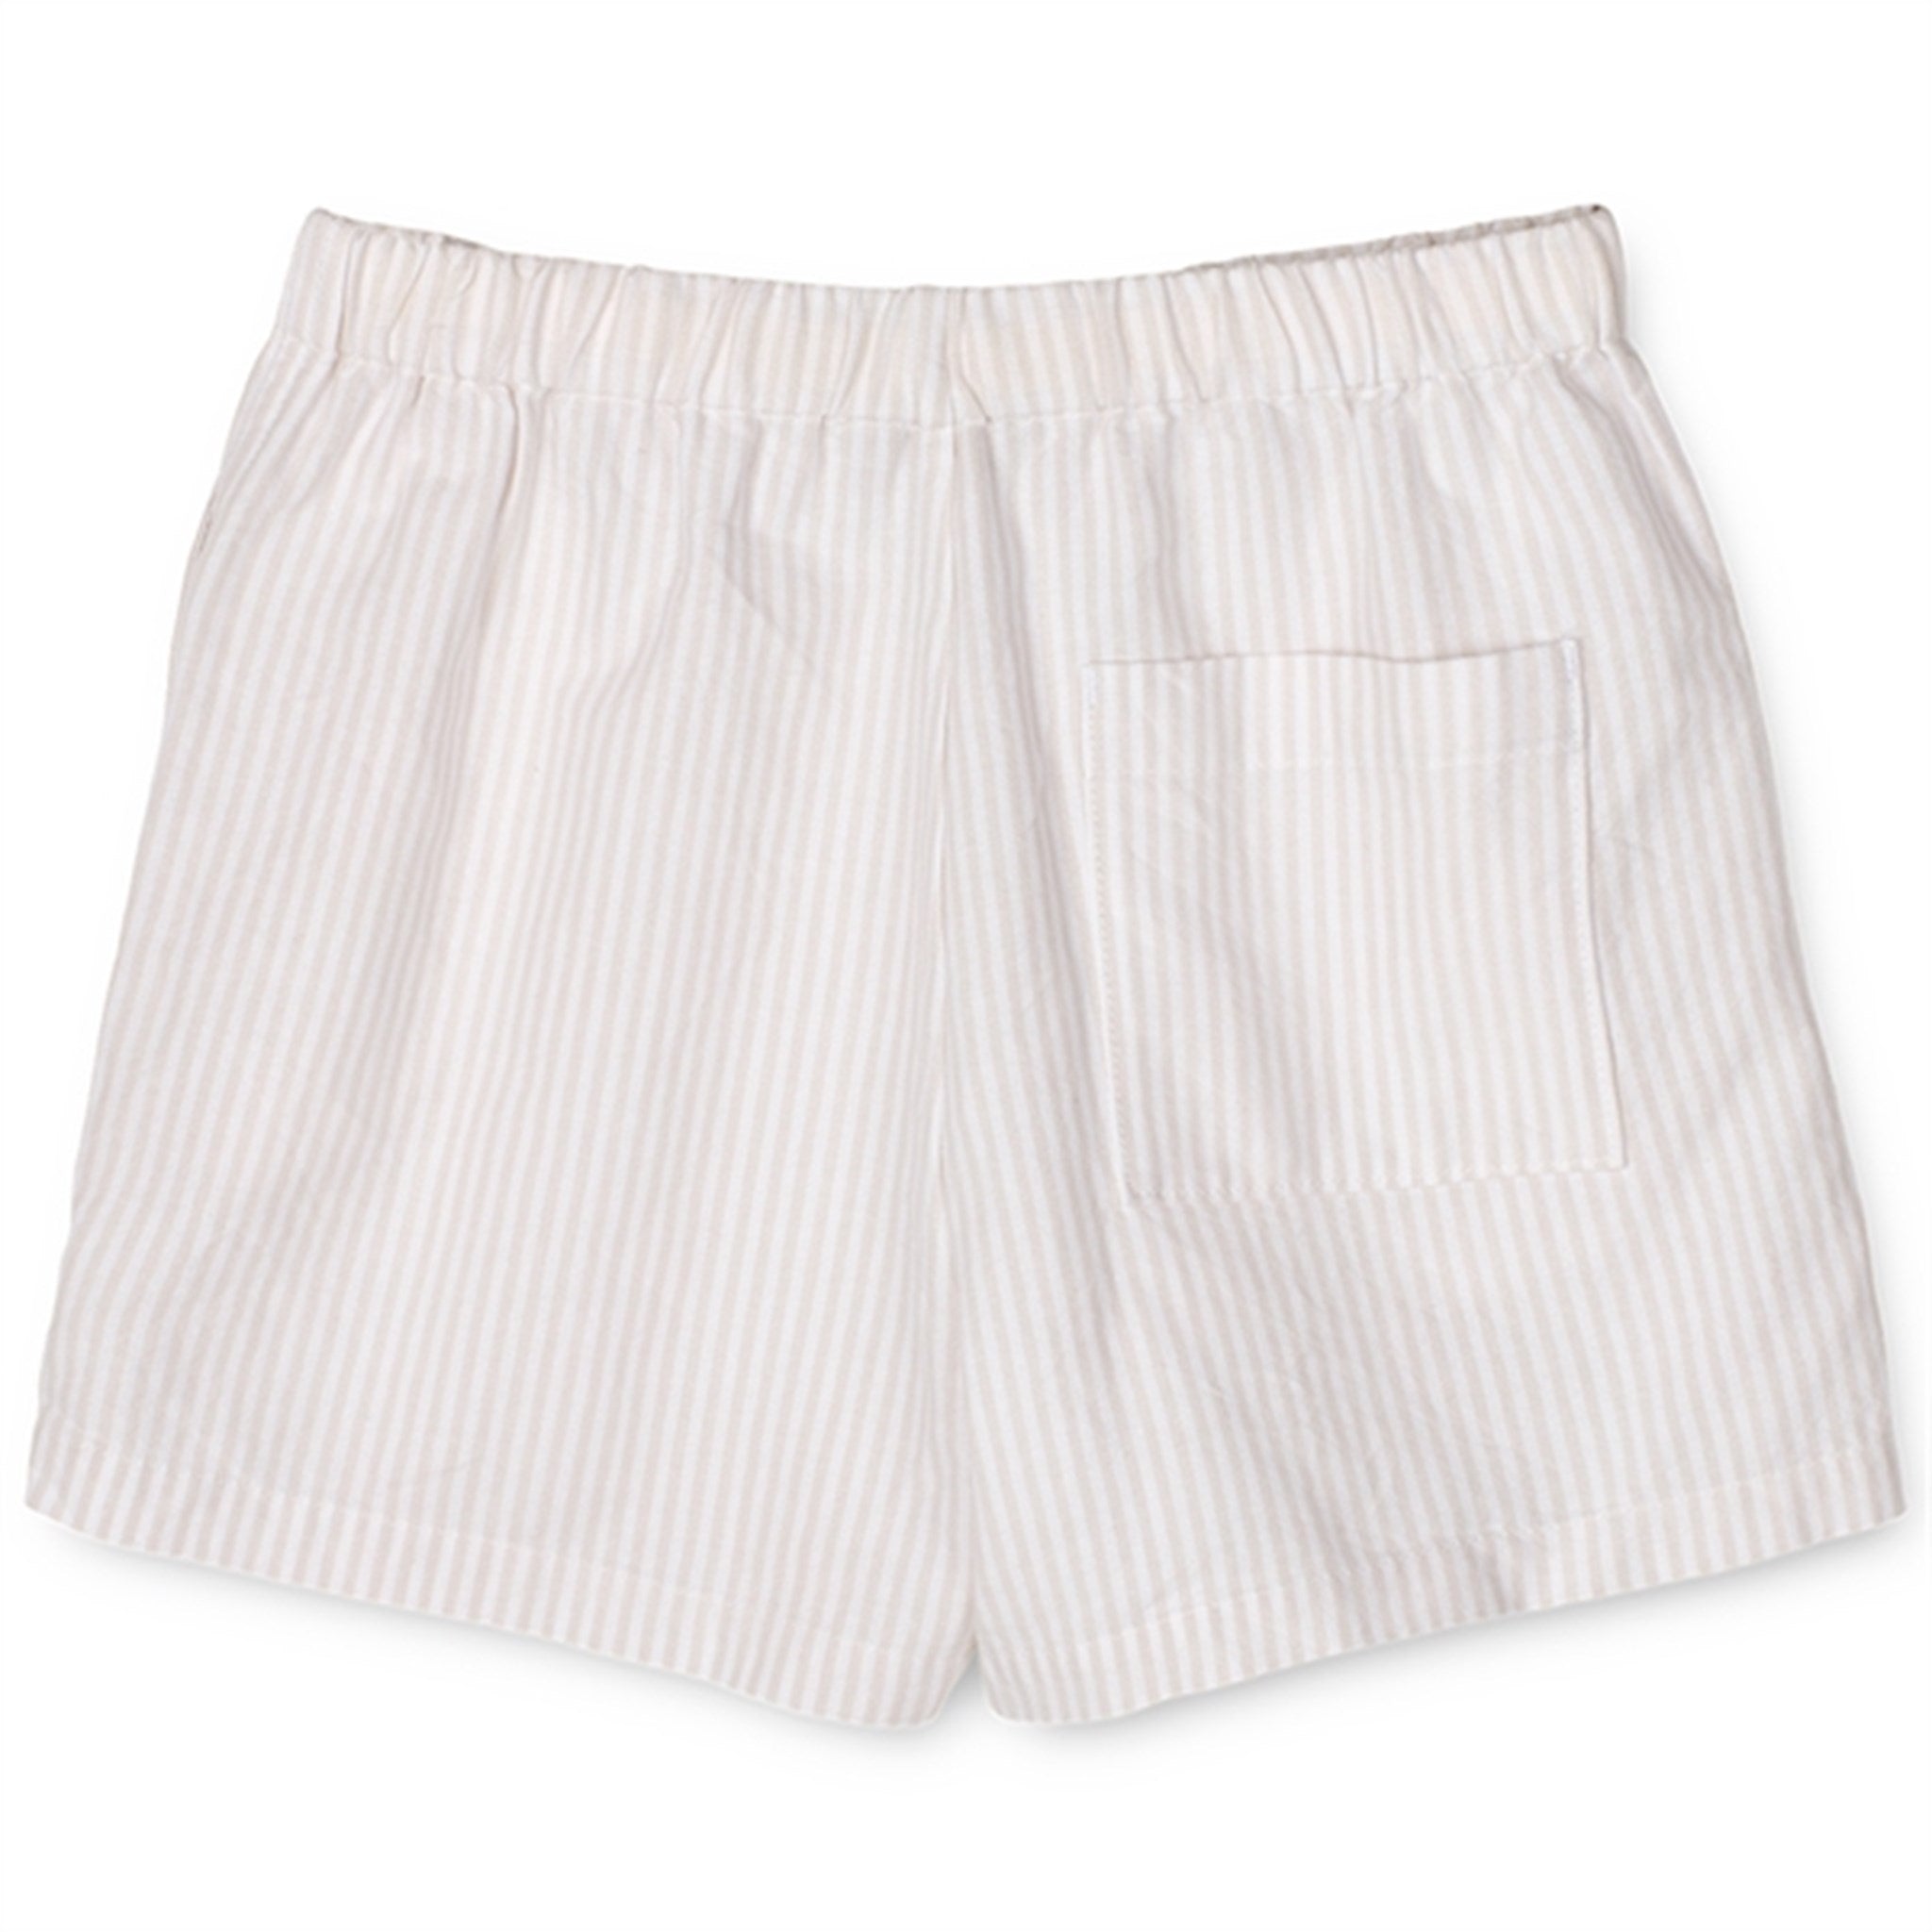 Liewood Madison Y/D Stripe Shorts Y/D Stripe Crisp White/Sandy 4